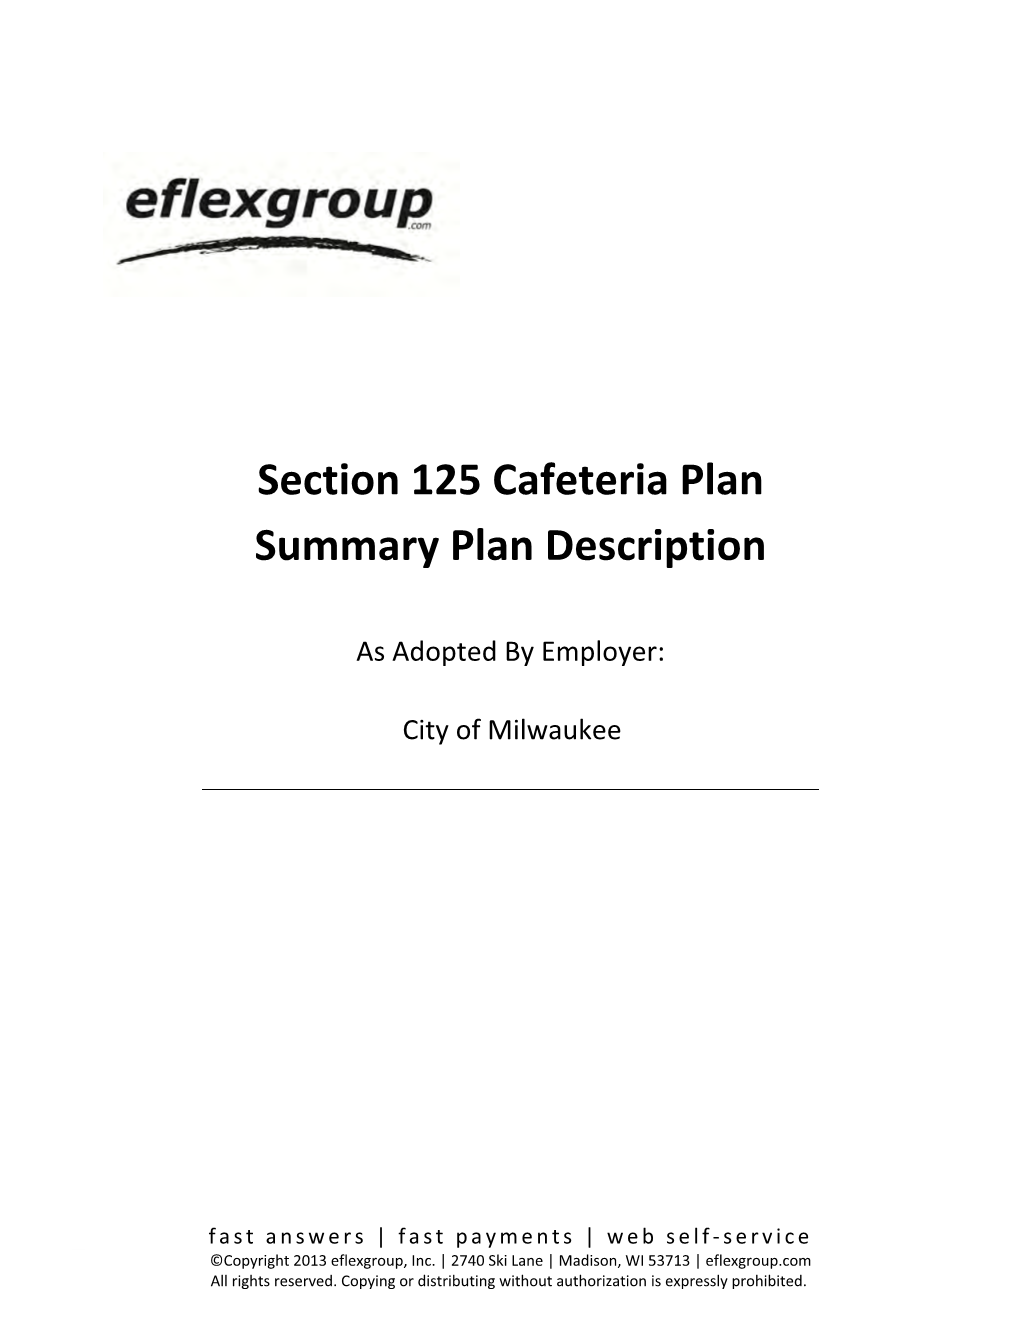 Section 125 Cafeteria Plan Summary Plan Description DocsLib